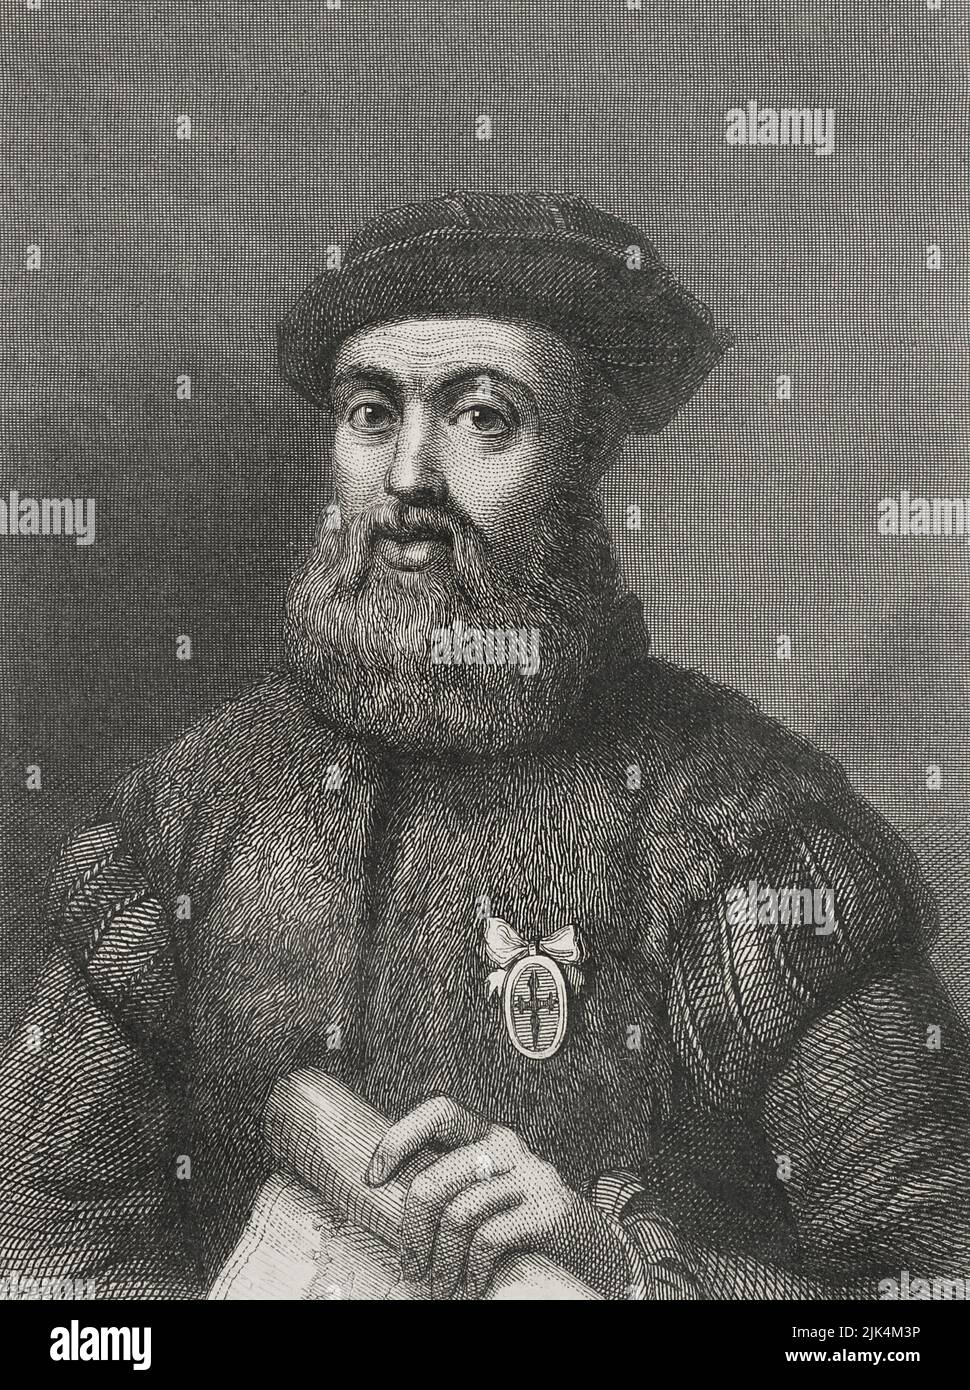 Ferdinand Magellan (1480-1521). esploratore portoghese. Verticale. Incisione di Geoffroy. "Historia Universal", di César Cantú. Volume IV, 1856. Foto Stock